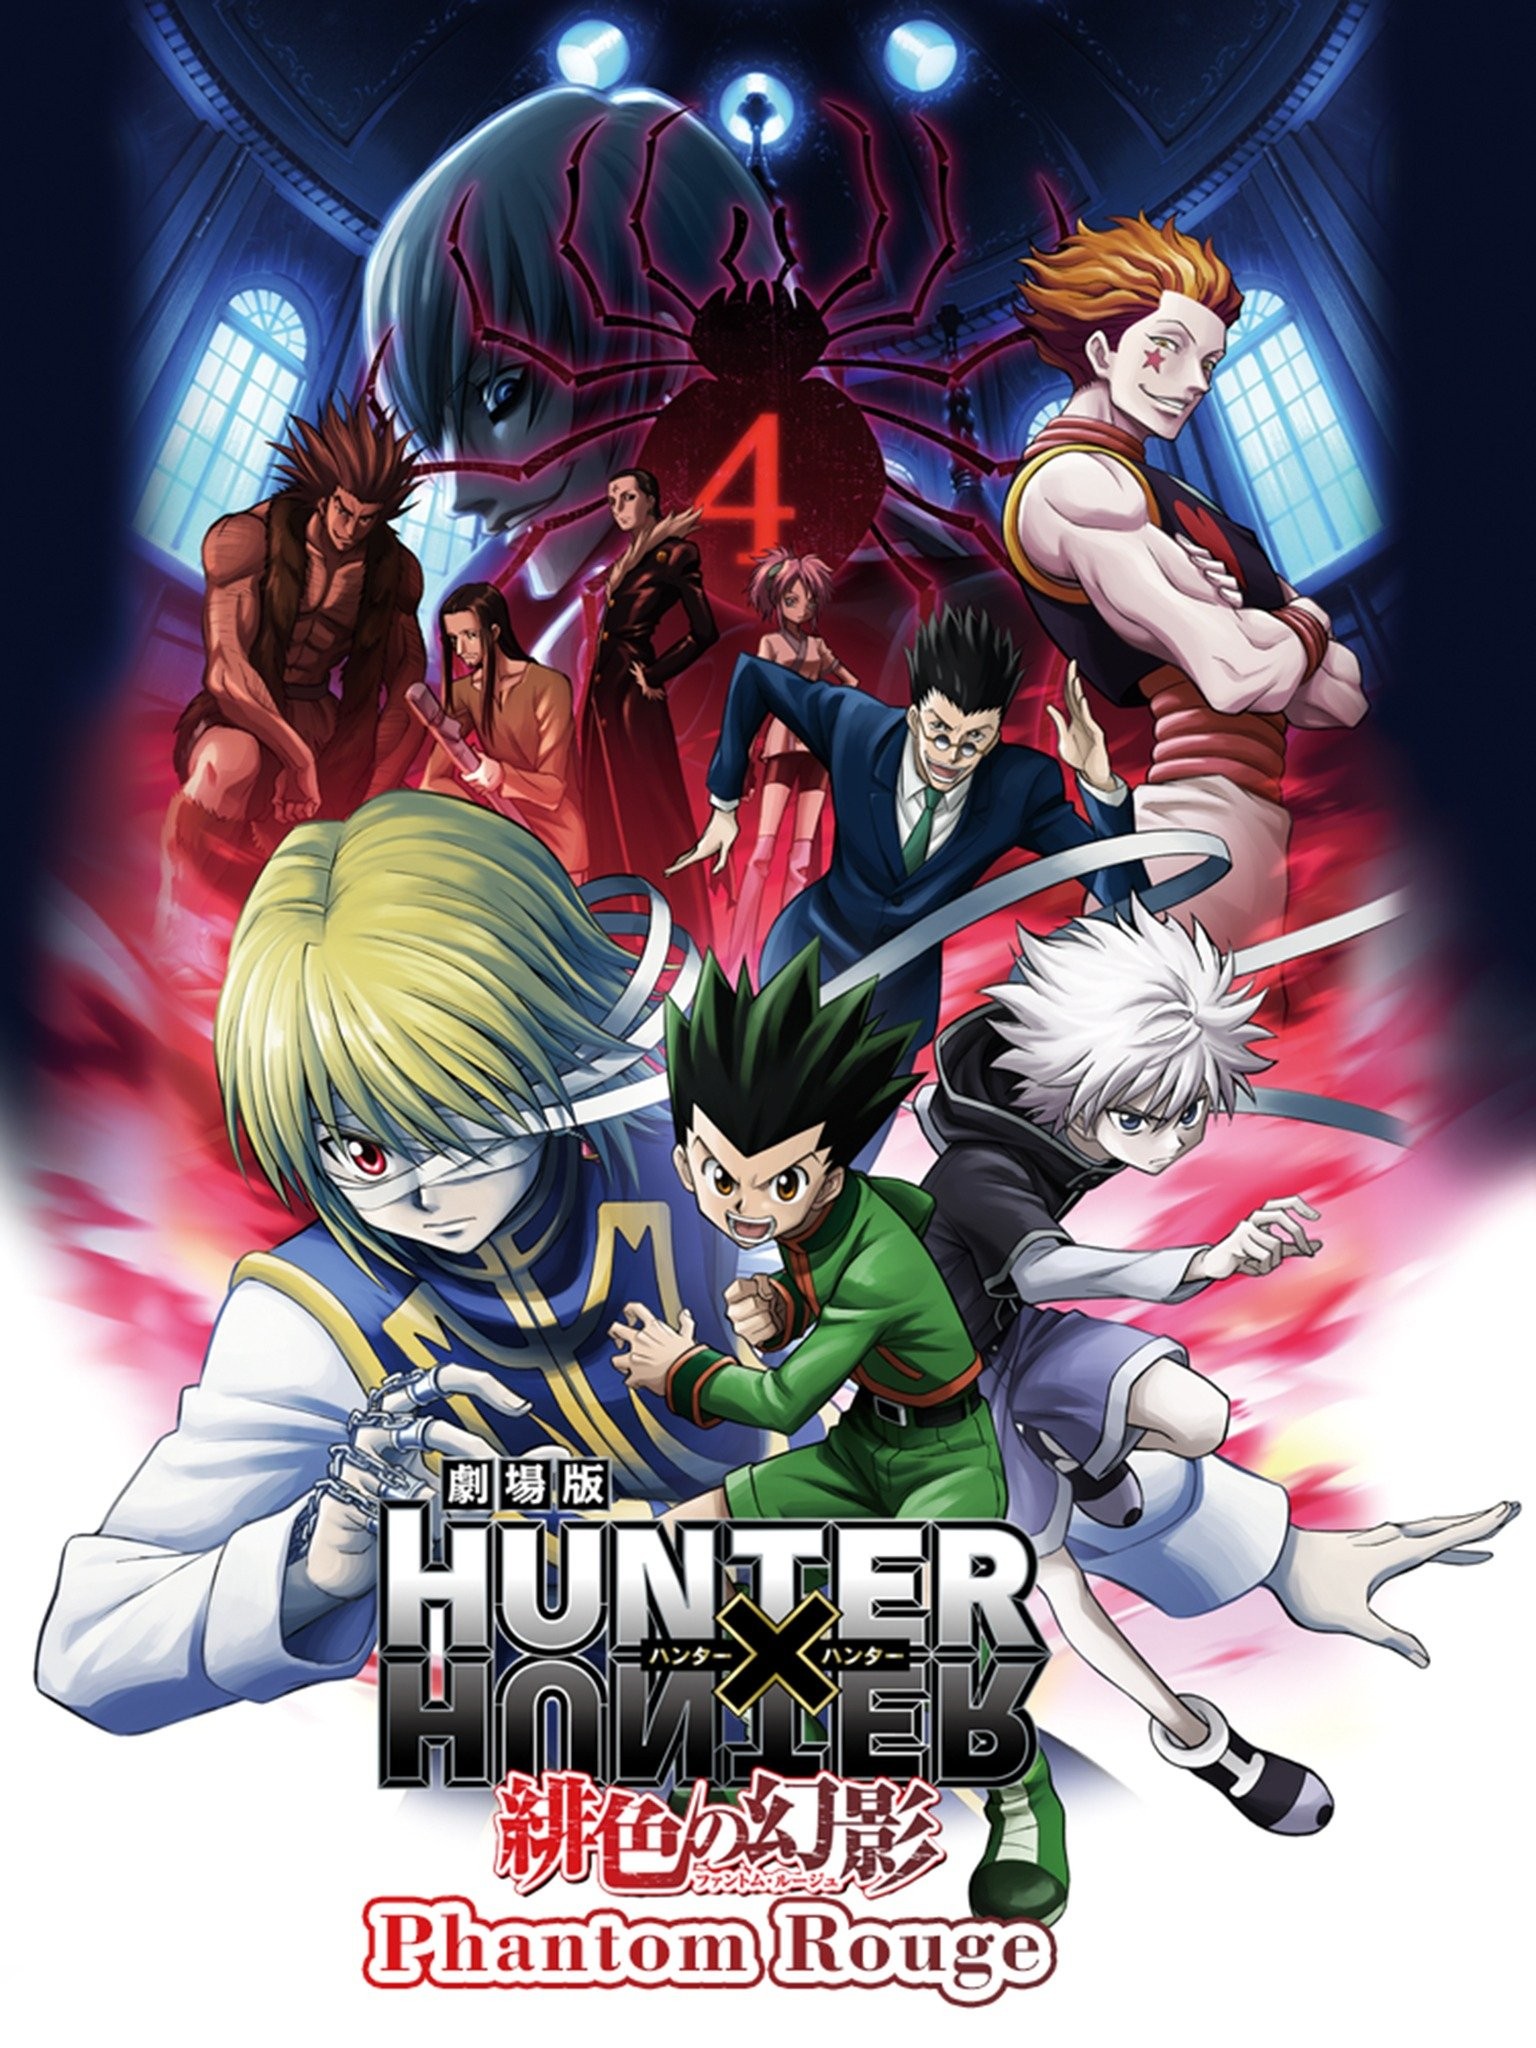 Hunter x Hunter - Series - Where To Watch